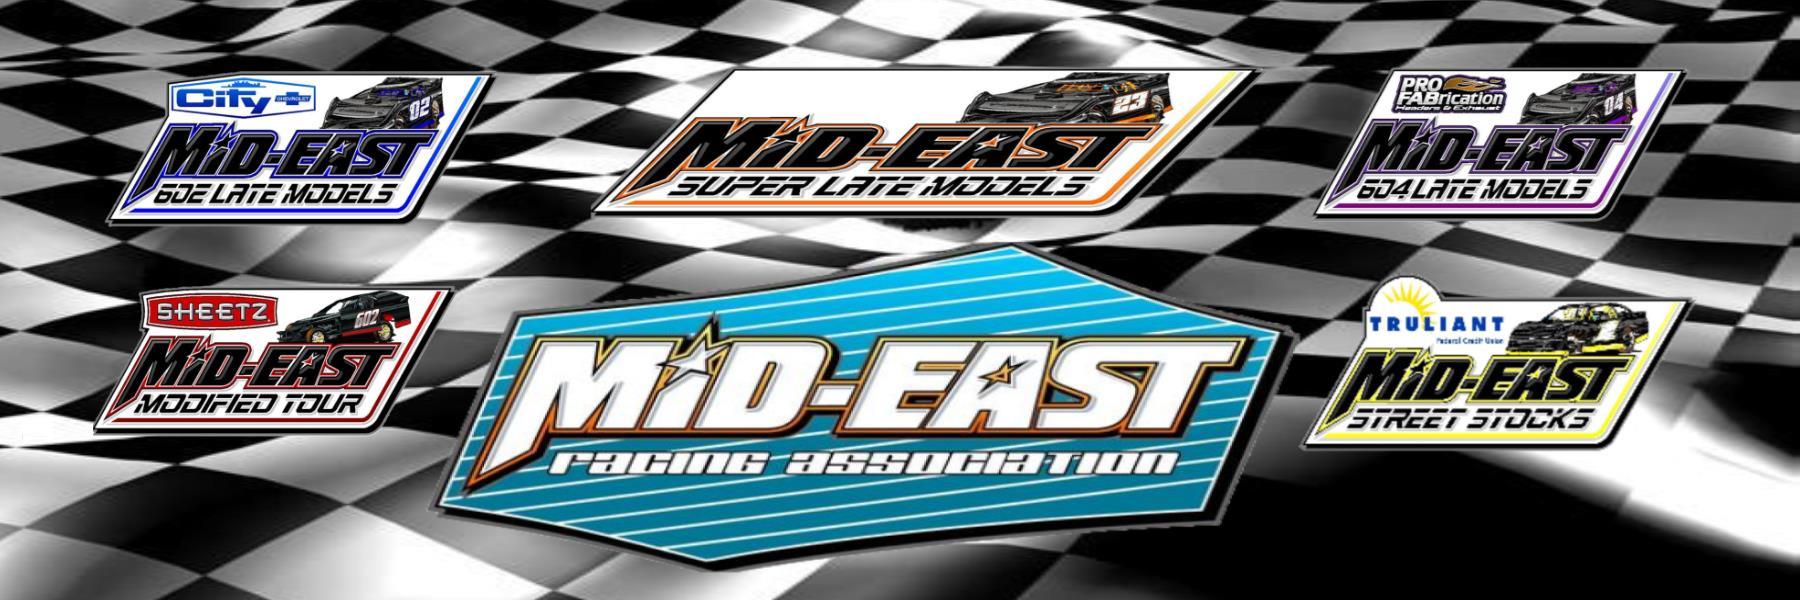 Mid-East Racing Association